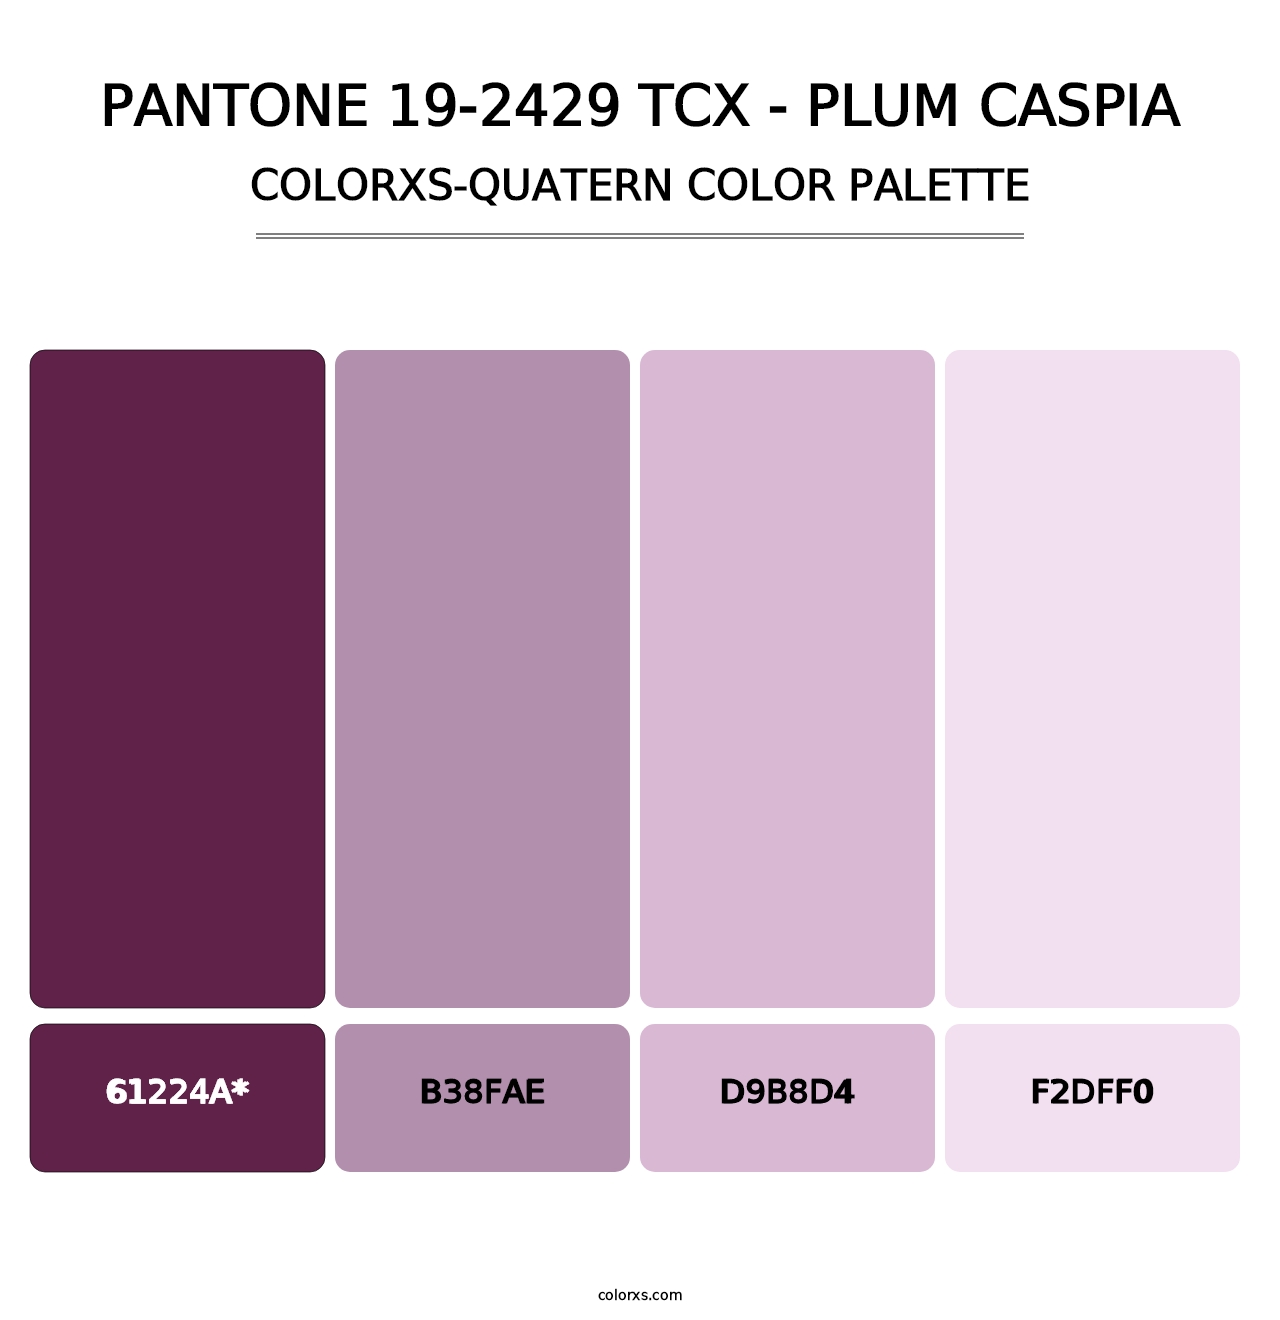 PANTONE 19-2429 TCX - Plum Caspia - Colorxs Quatern Palette